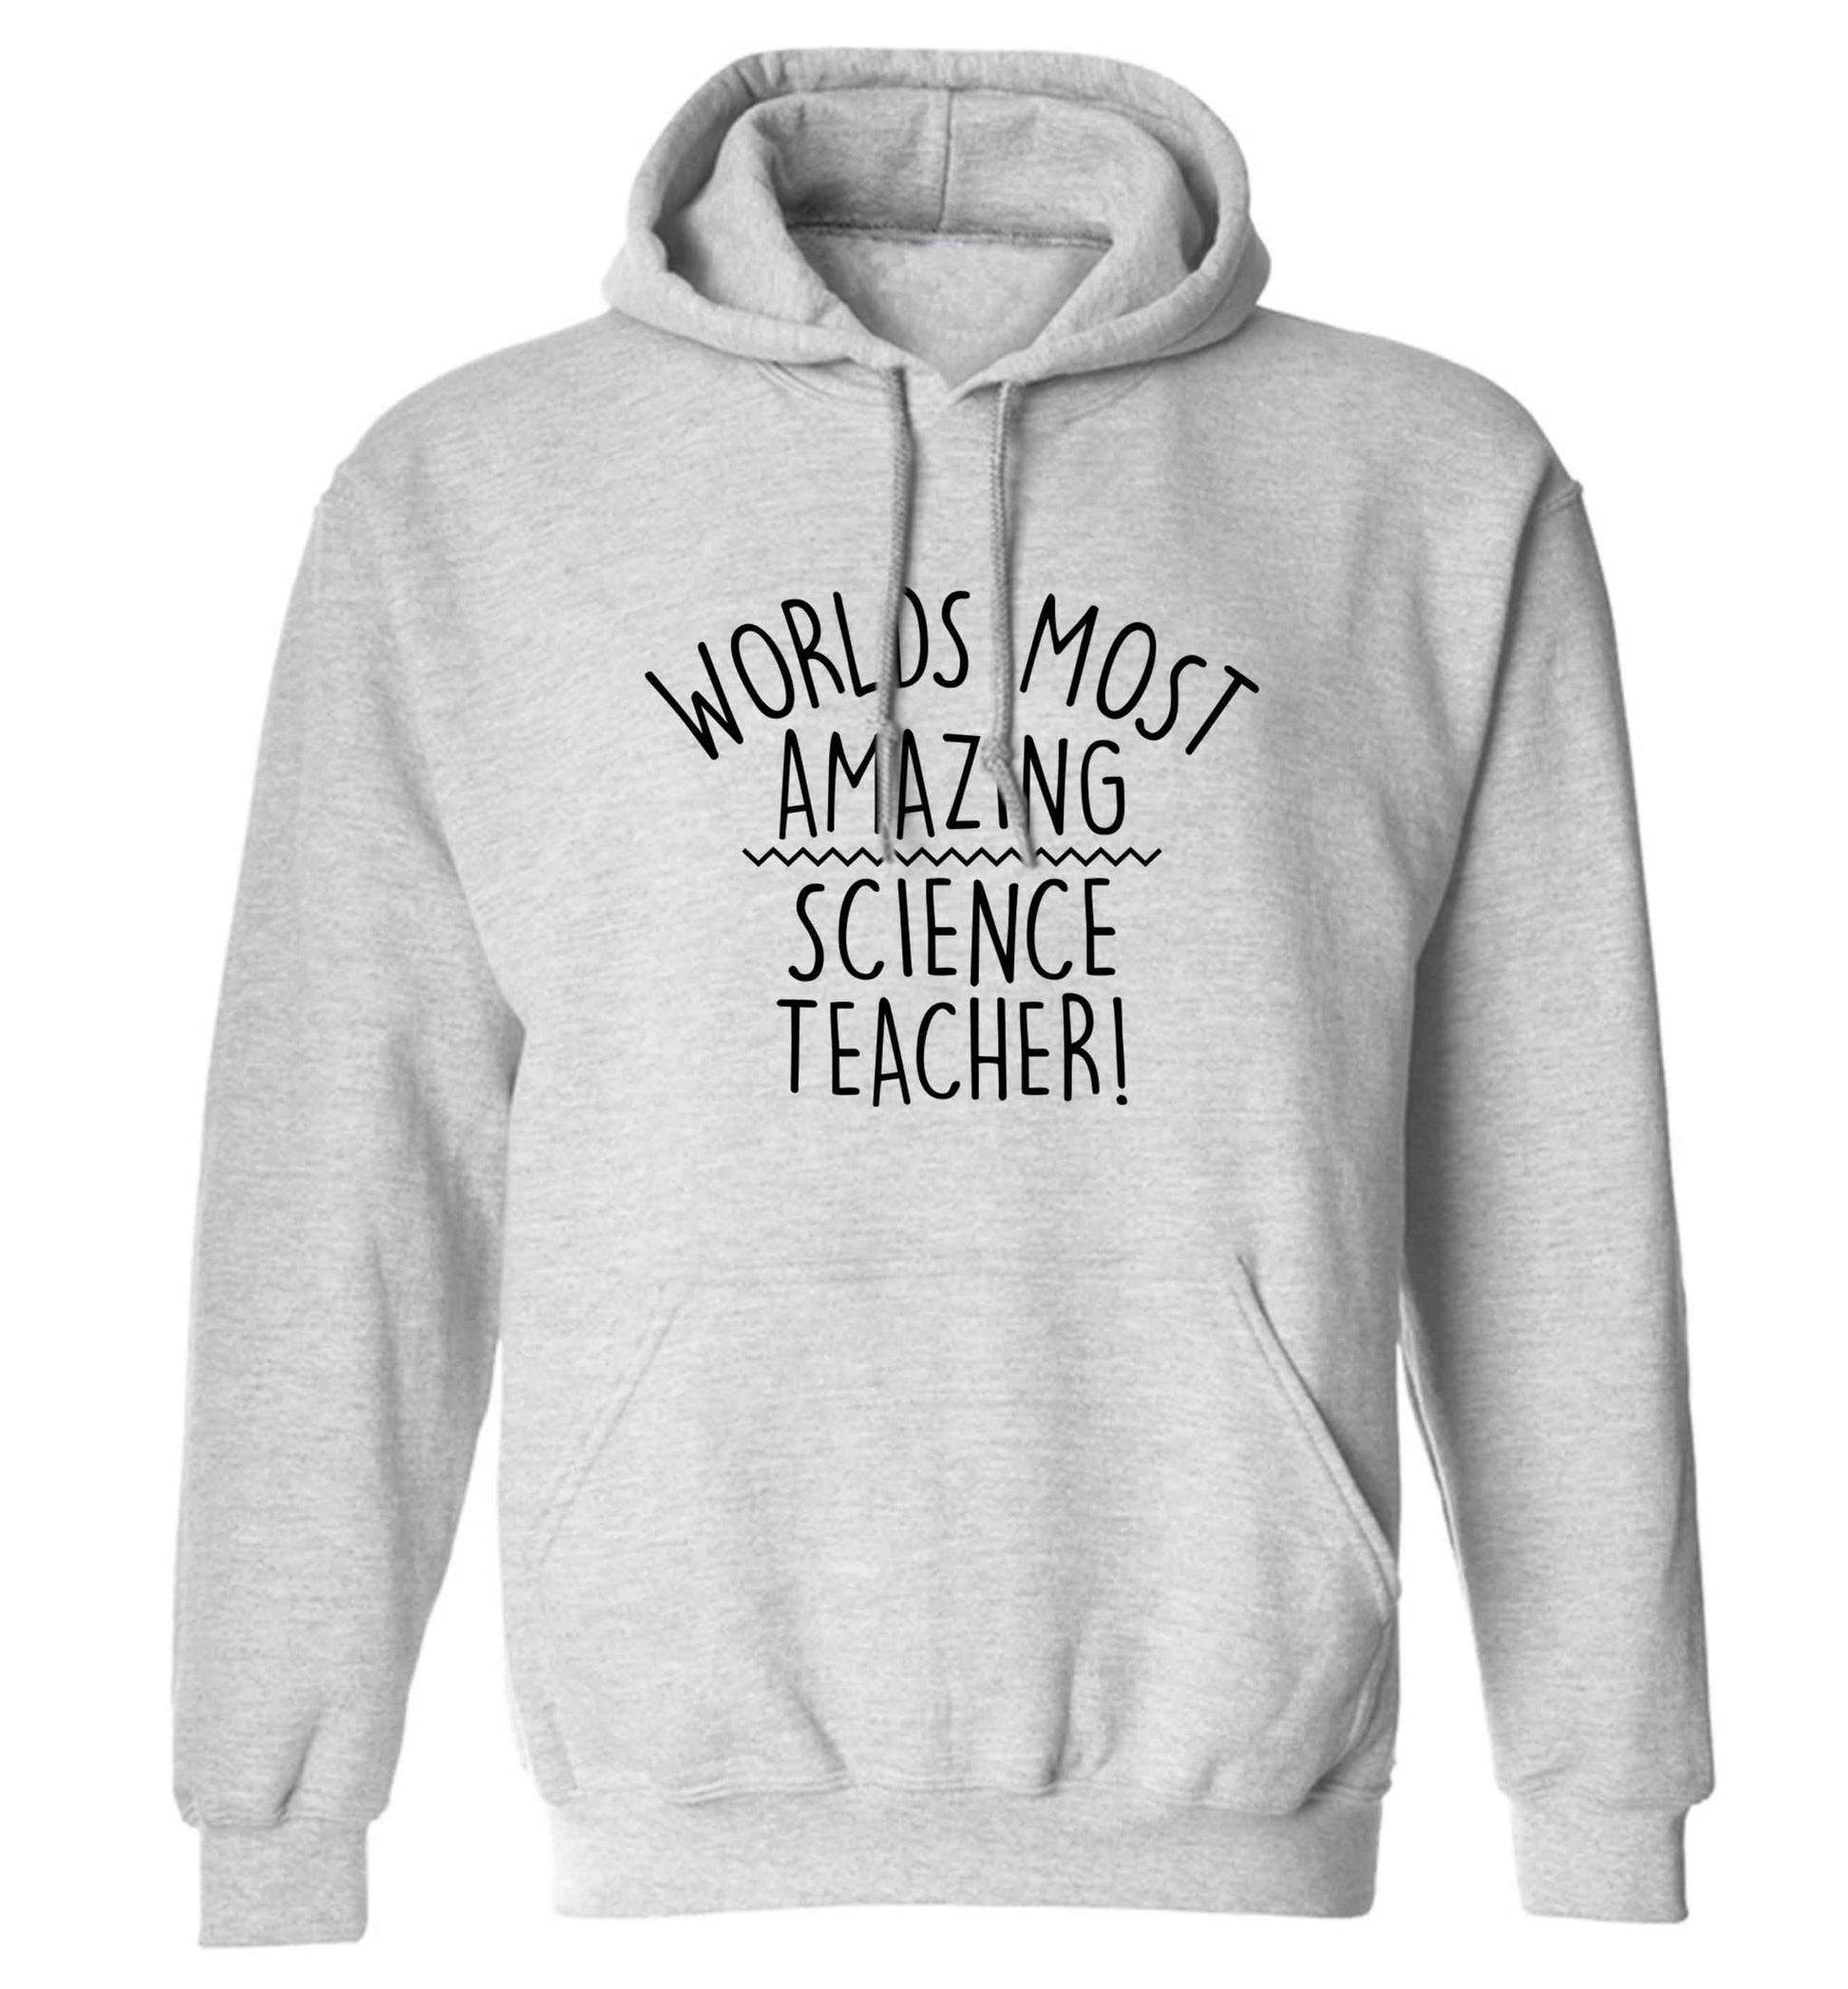 Worlds most amazing science teacher adults unisex grey hoodie 2XL